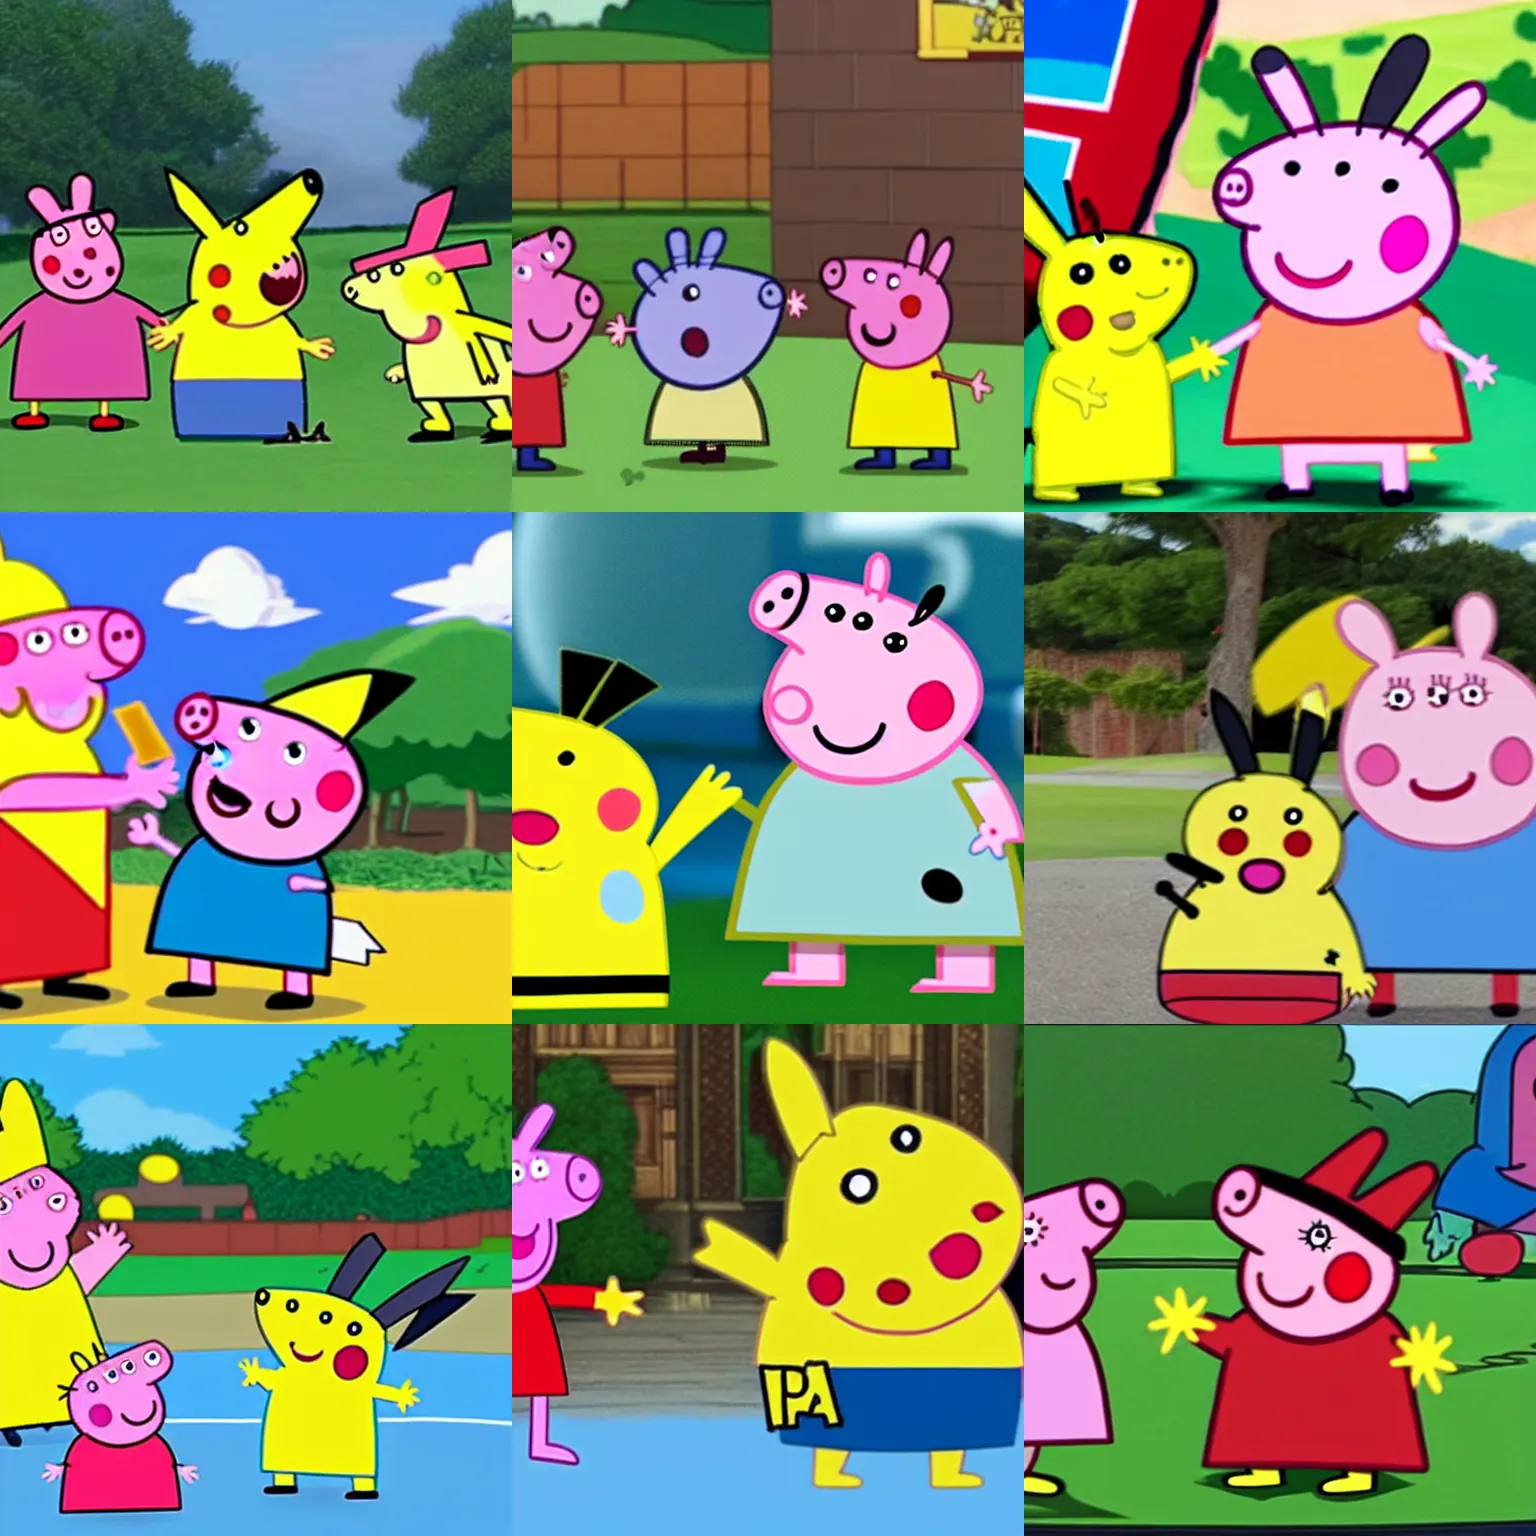 Prompt: peppa pig battling pikachu in an episode of pokemon